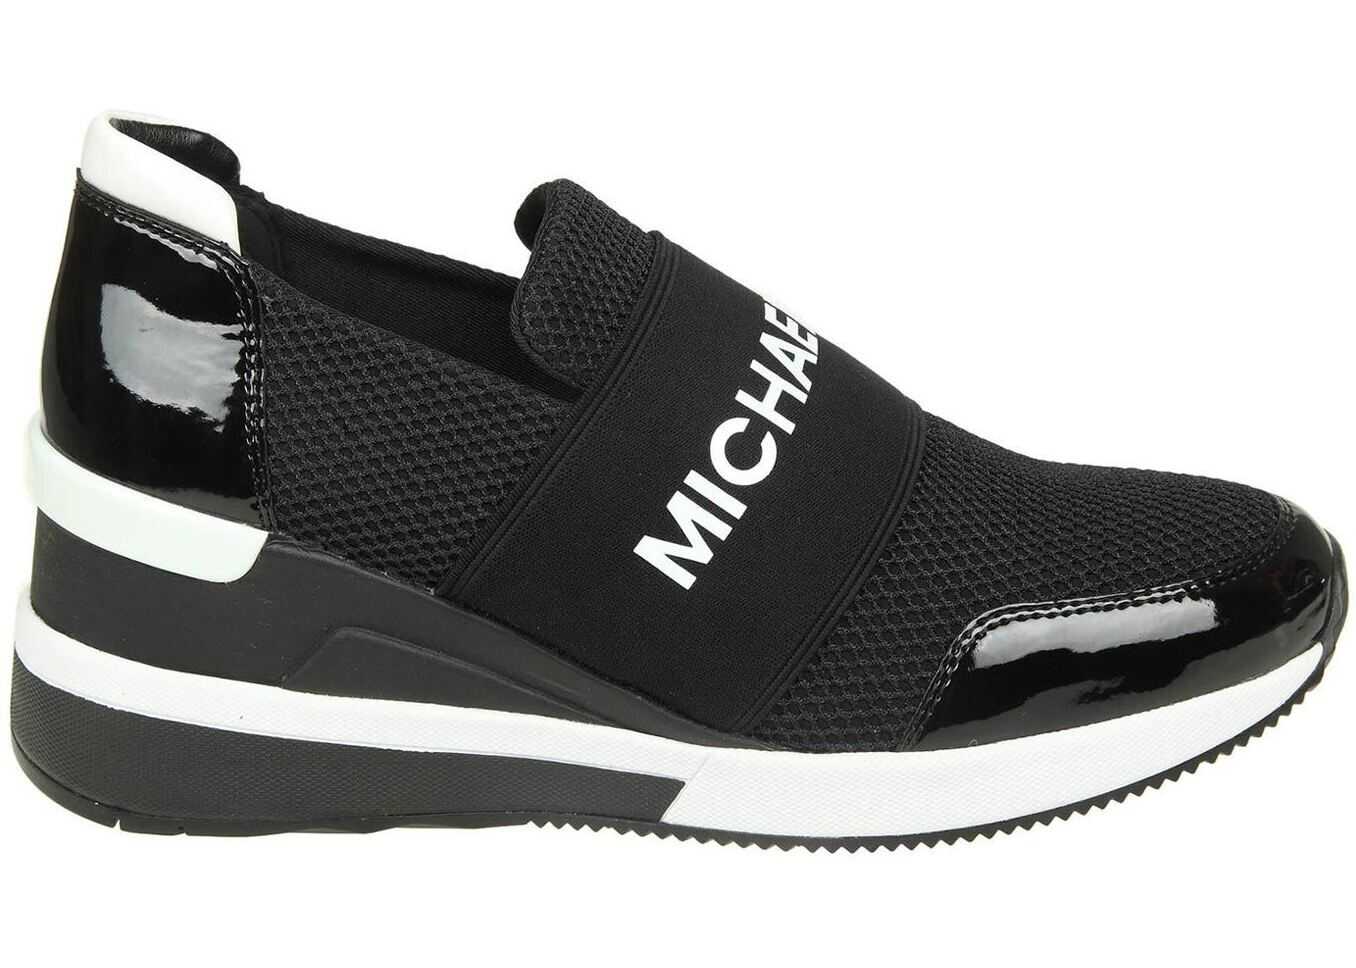 Michael Kors Felix Black And White Sneakers Black